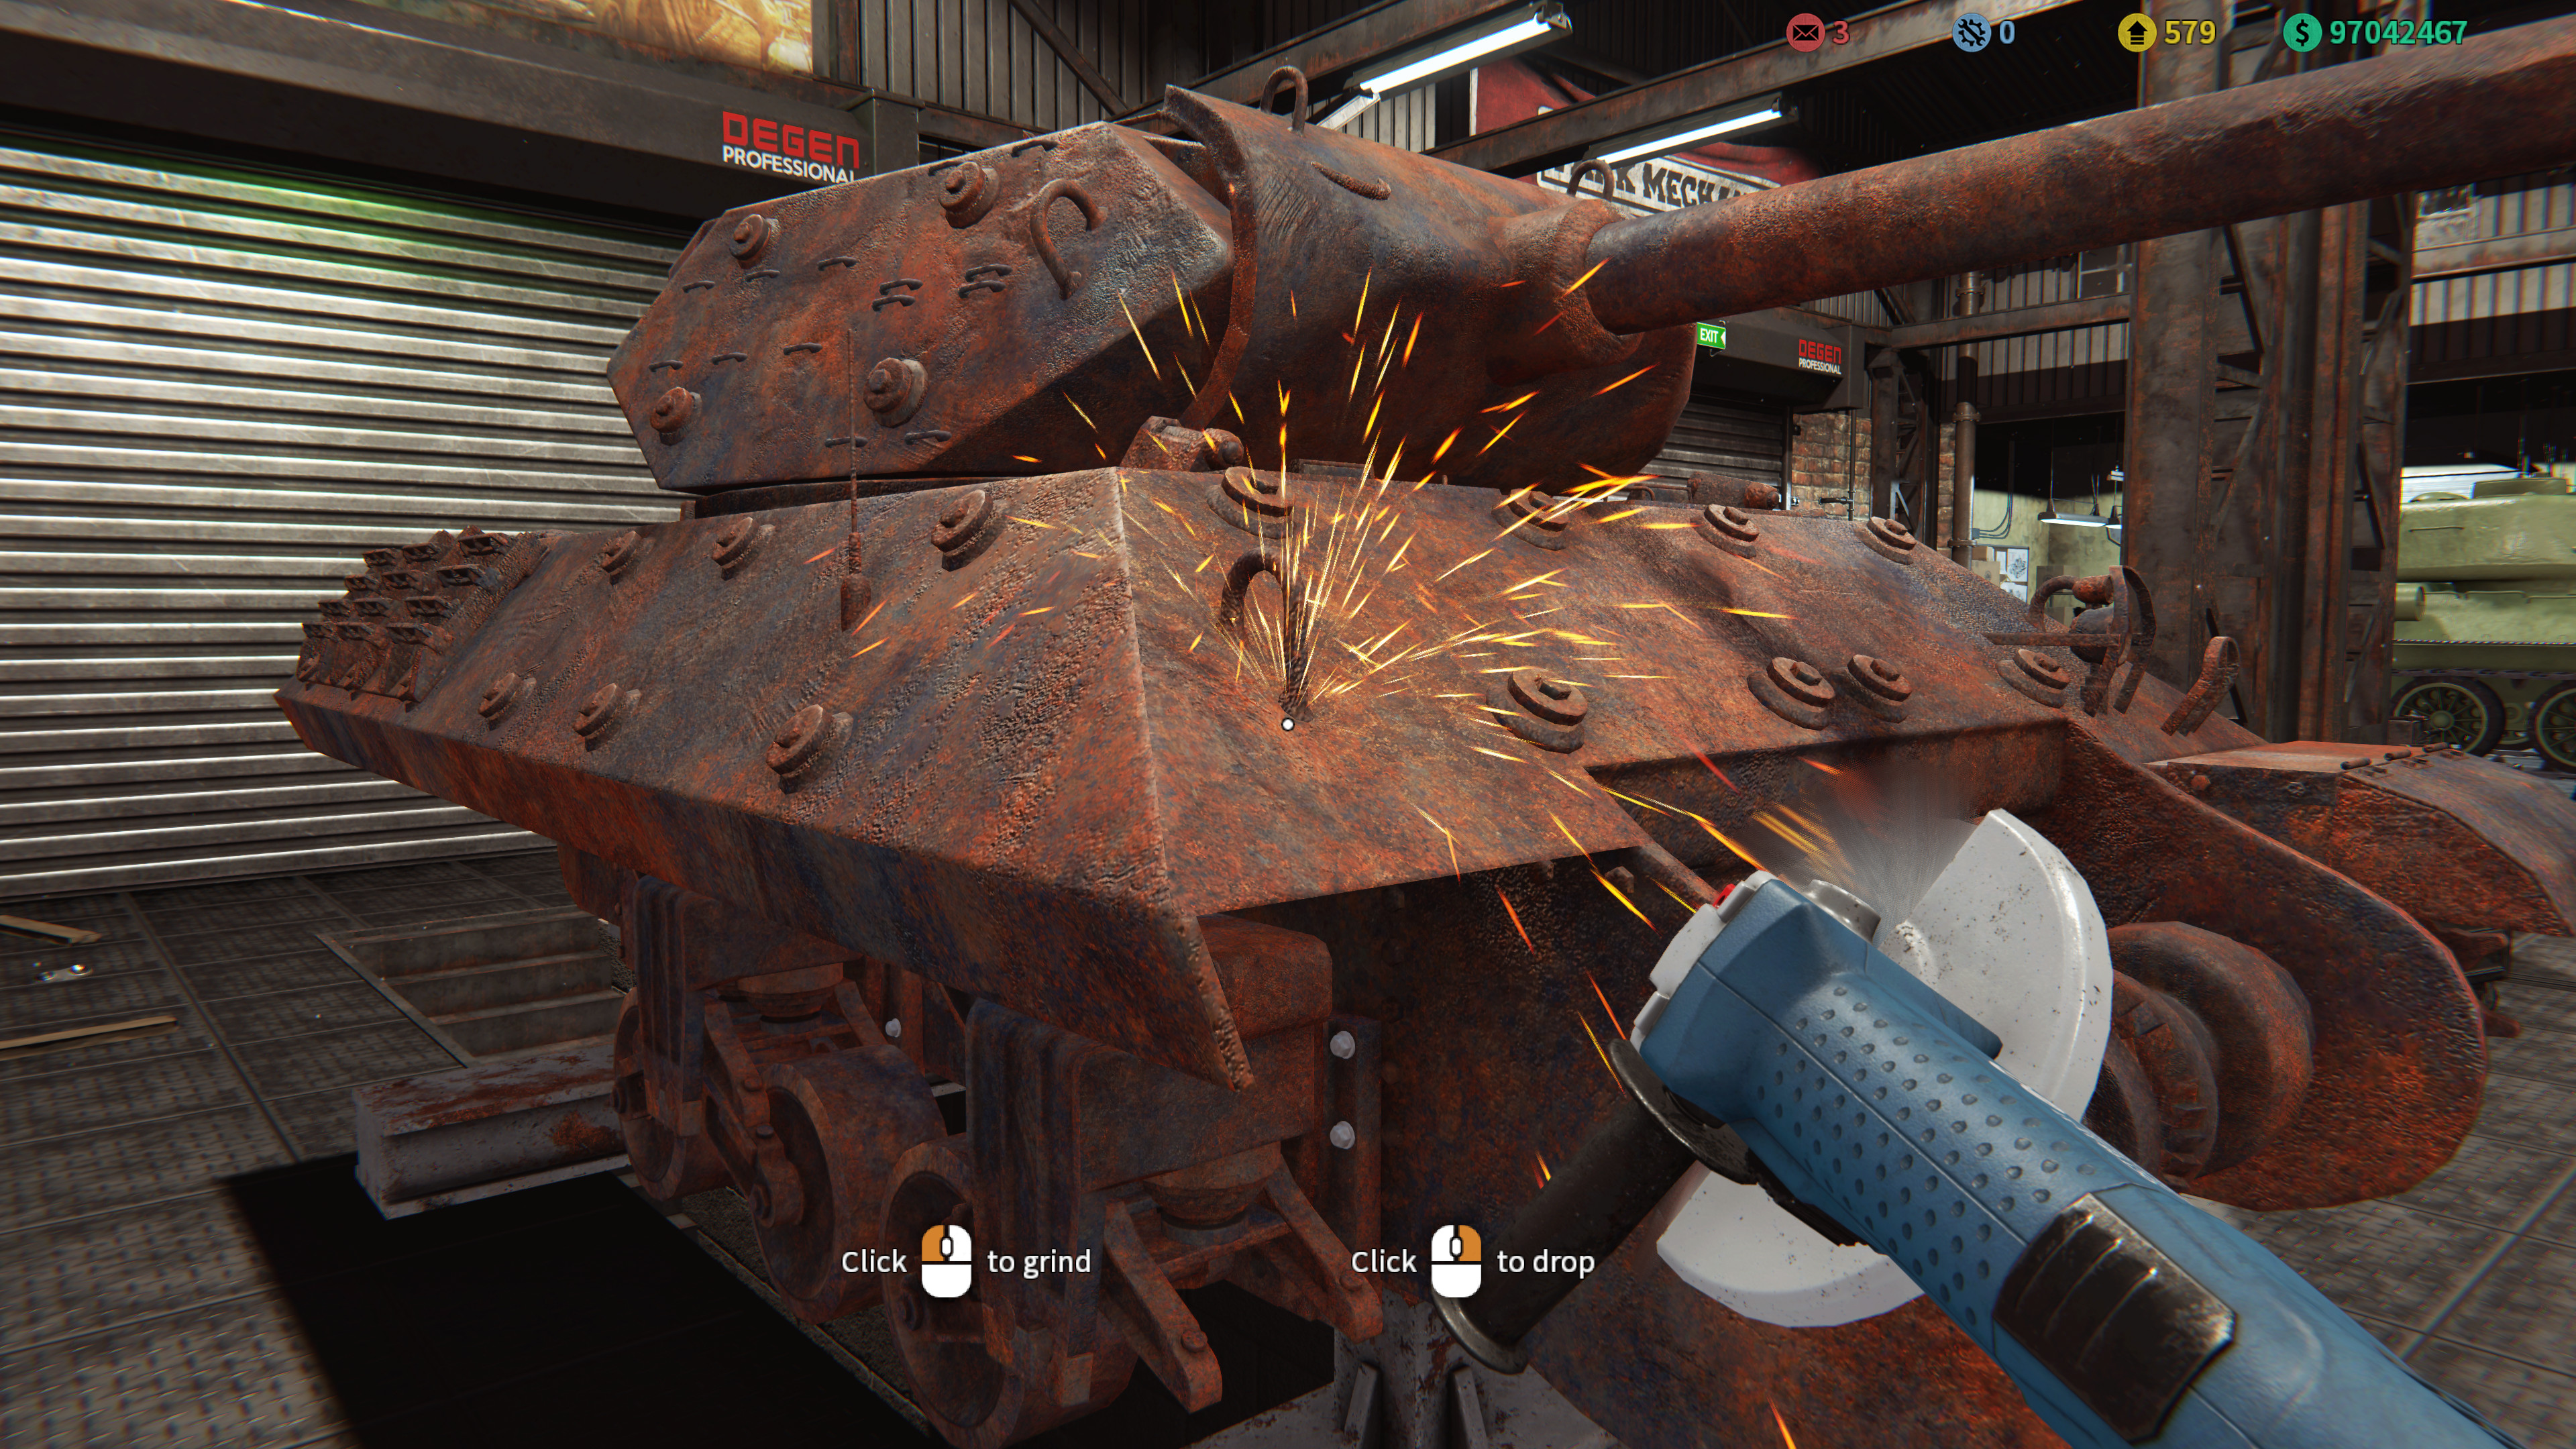 Tank Mechanic Simulator screenshot